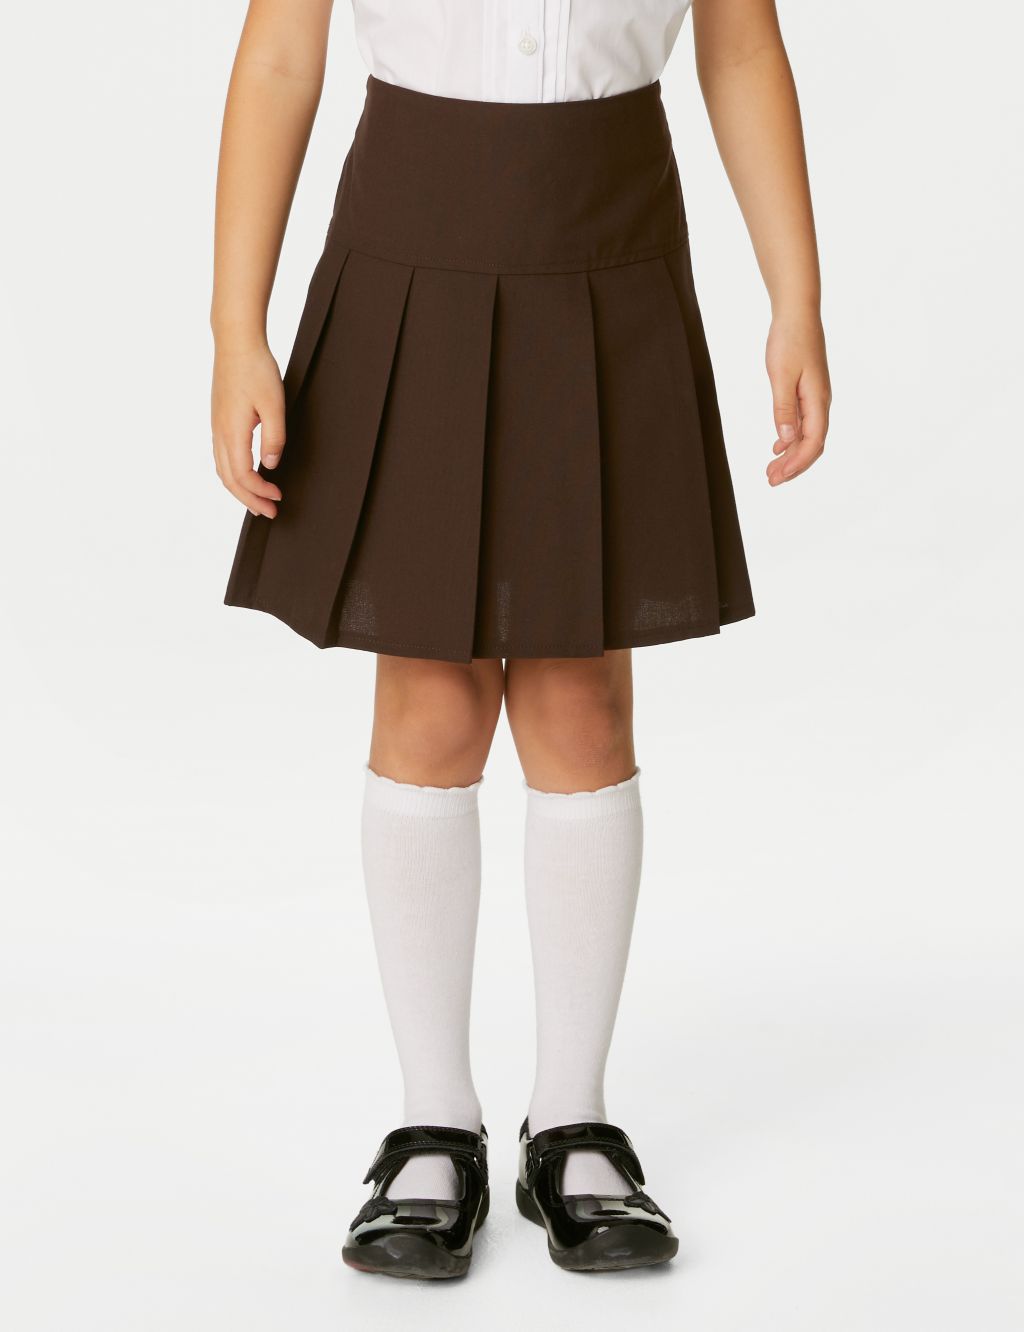 2pk Girls' Crease Resistant School Skirts (2-16 Yrs) image 3